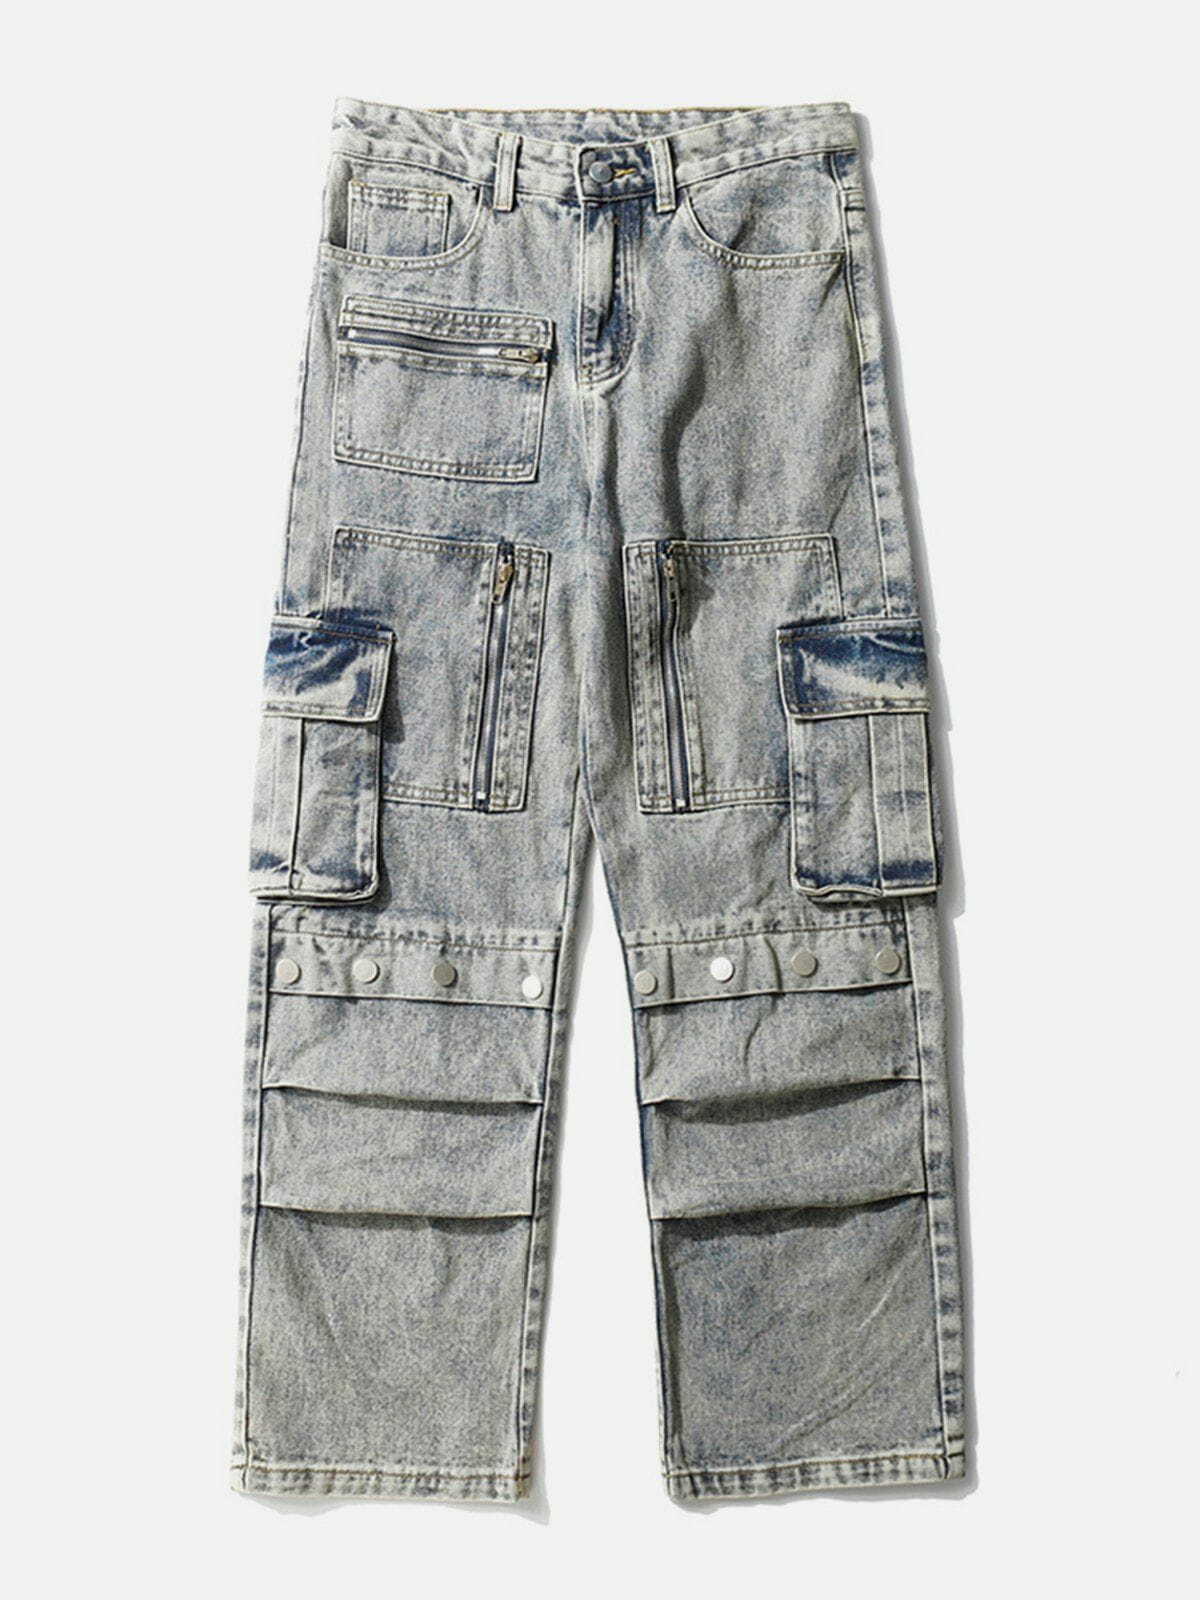 trendy multi pocket jeans straight leg urban appeal 2483